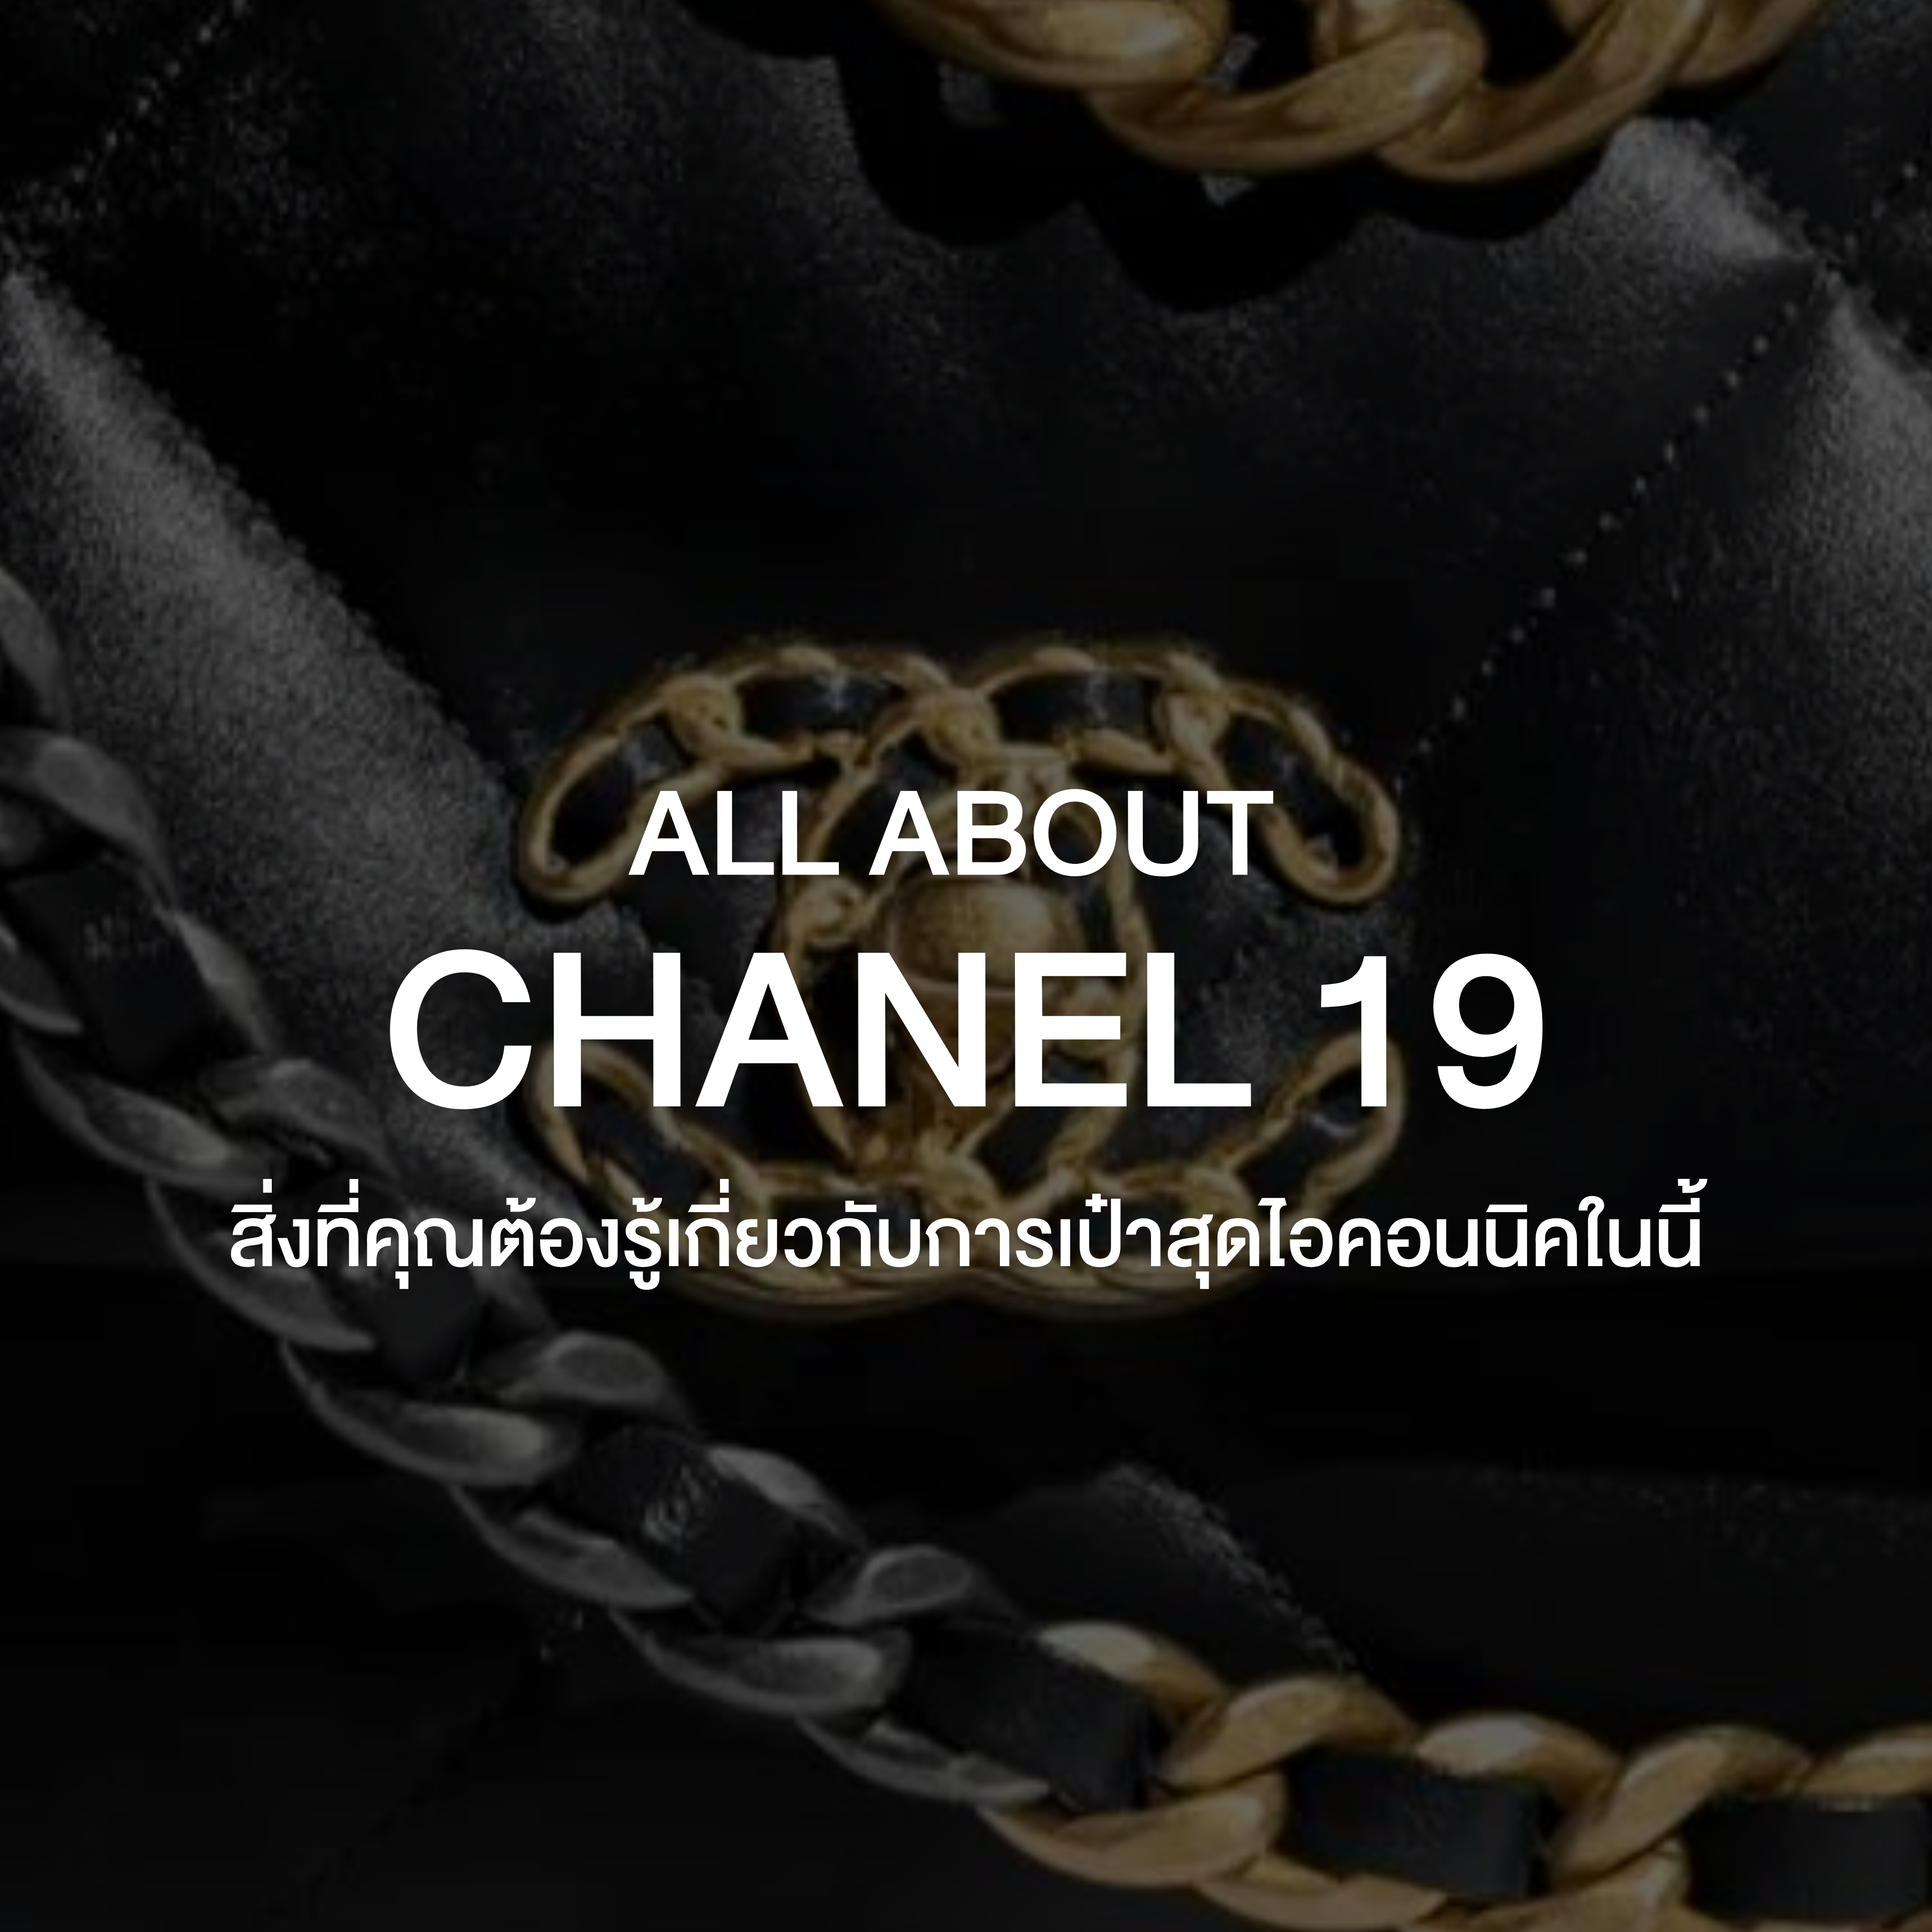 All About Chanel 19 สิ่งที่คุณต้องรู้เกี่ยวกับการเป๋าสุดไอคอนนิคในนี้